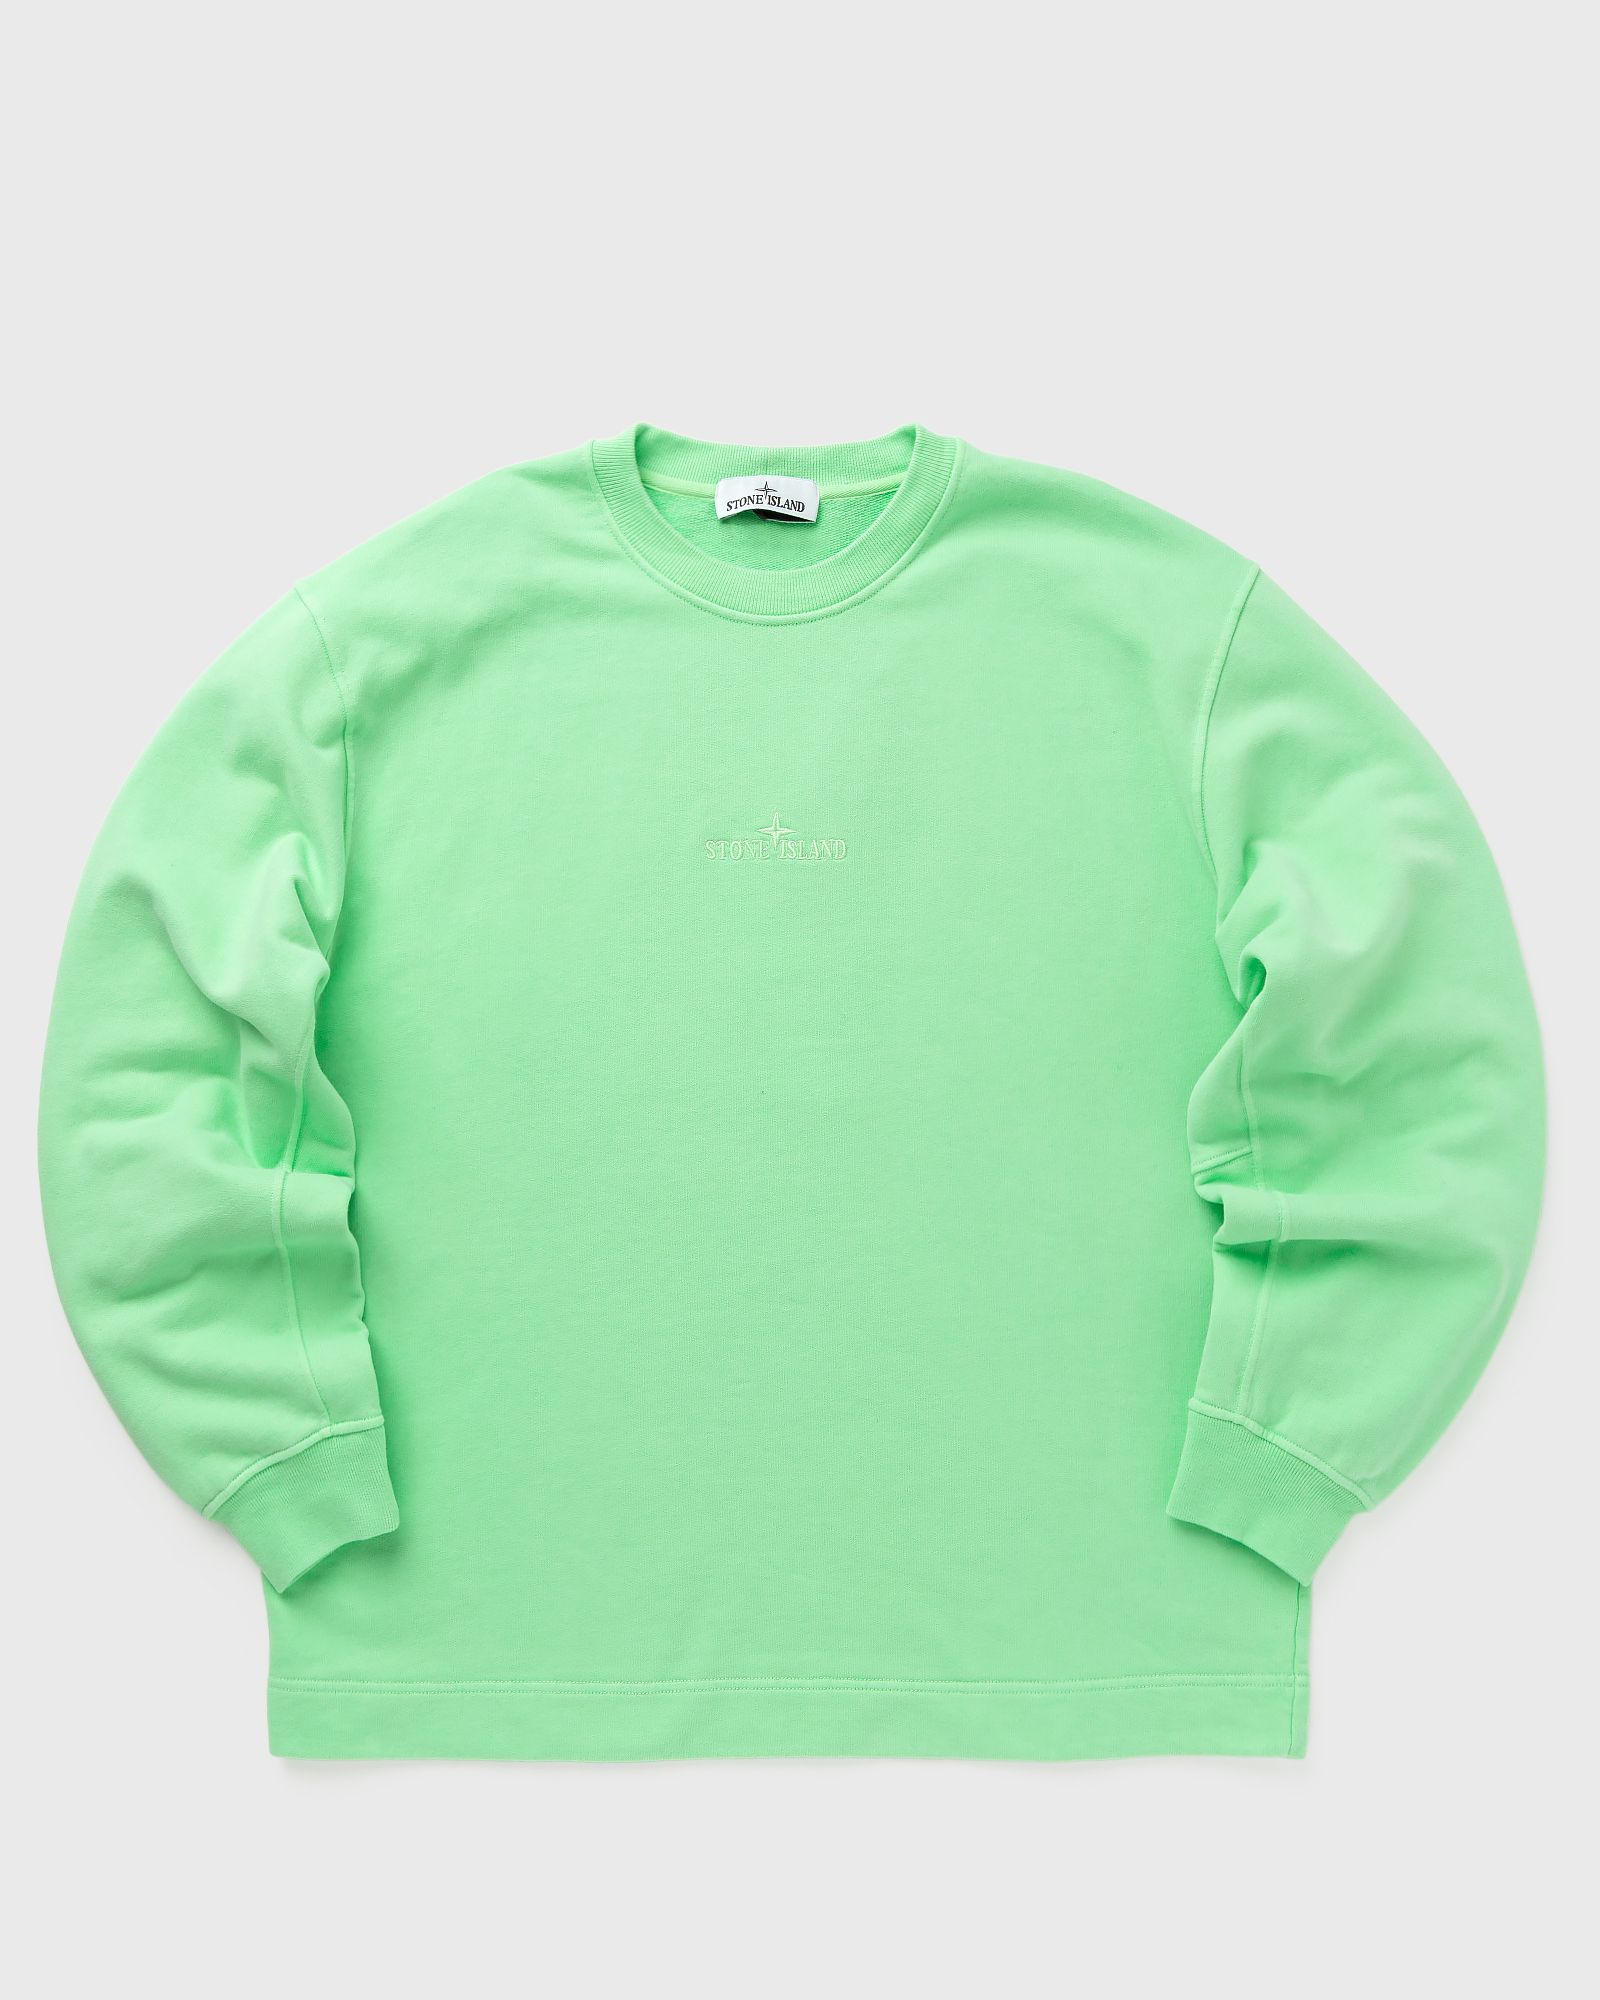 Stone Island - sweat-shirt brushed cotton fleece, garment dyed men sweatshirts green in größe:l